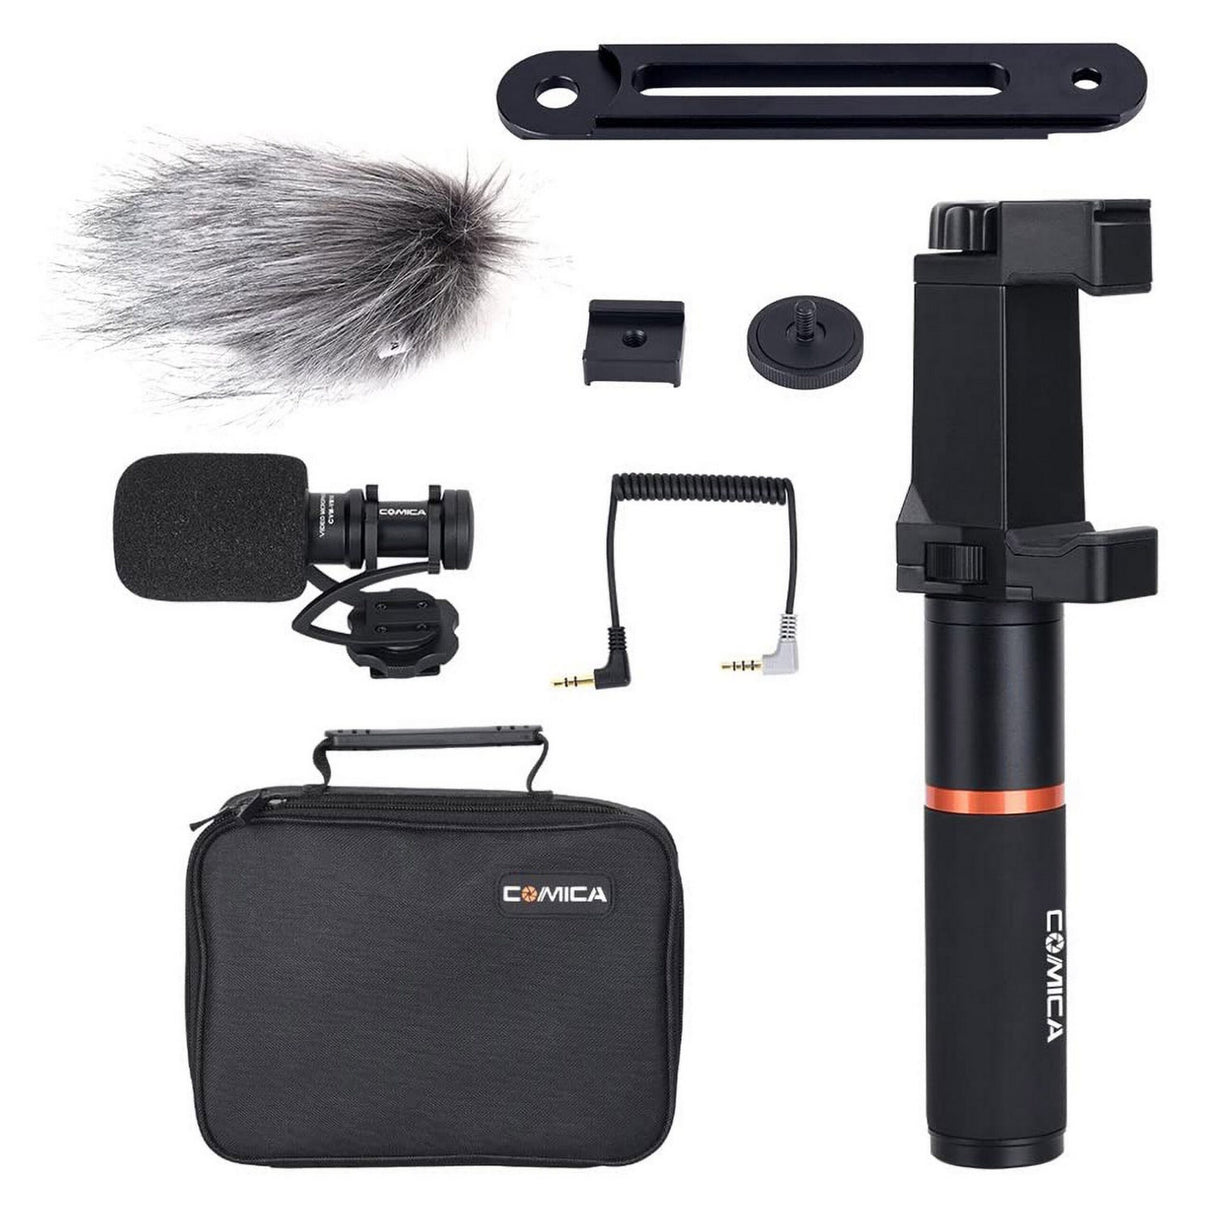 Comica CVM-VM10-K4 Full Metal Mini Compact On-Camera Directional Shotgun Video Microphone Kit